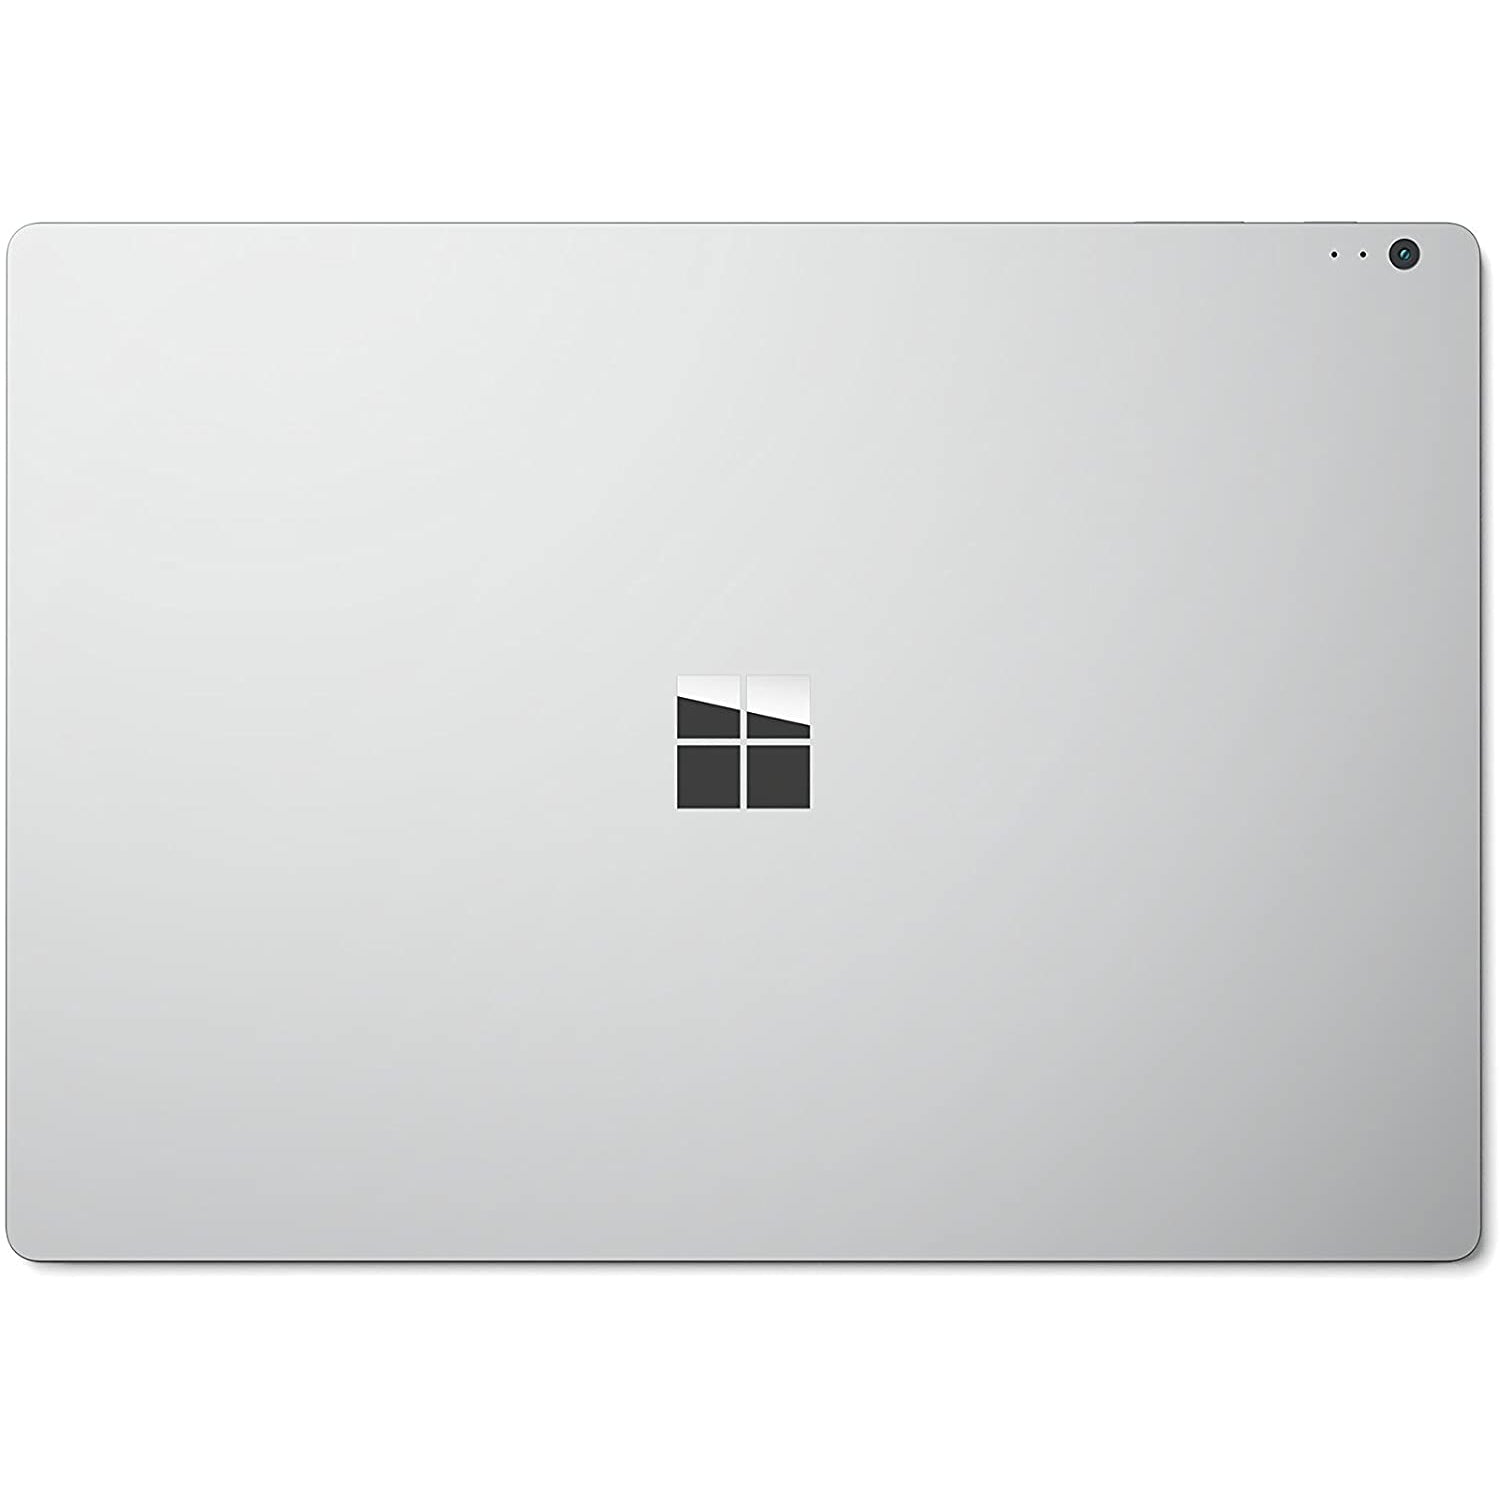 Microsoft Surface Book 13.5" Intel Core i7 16GB RAM 1TB - Silver - Refurbished Good - No Charger